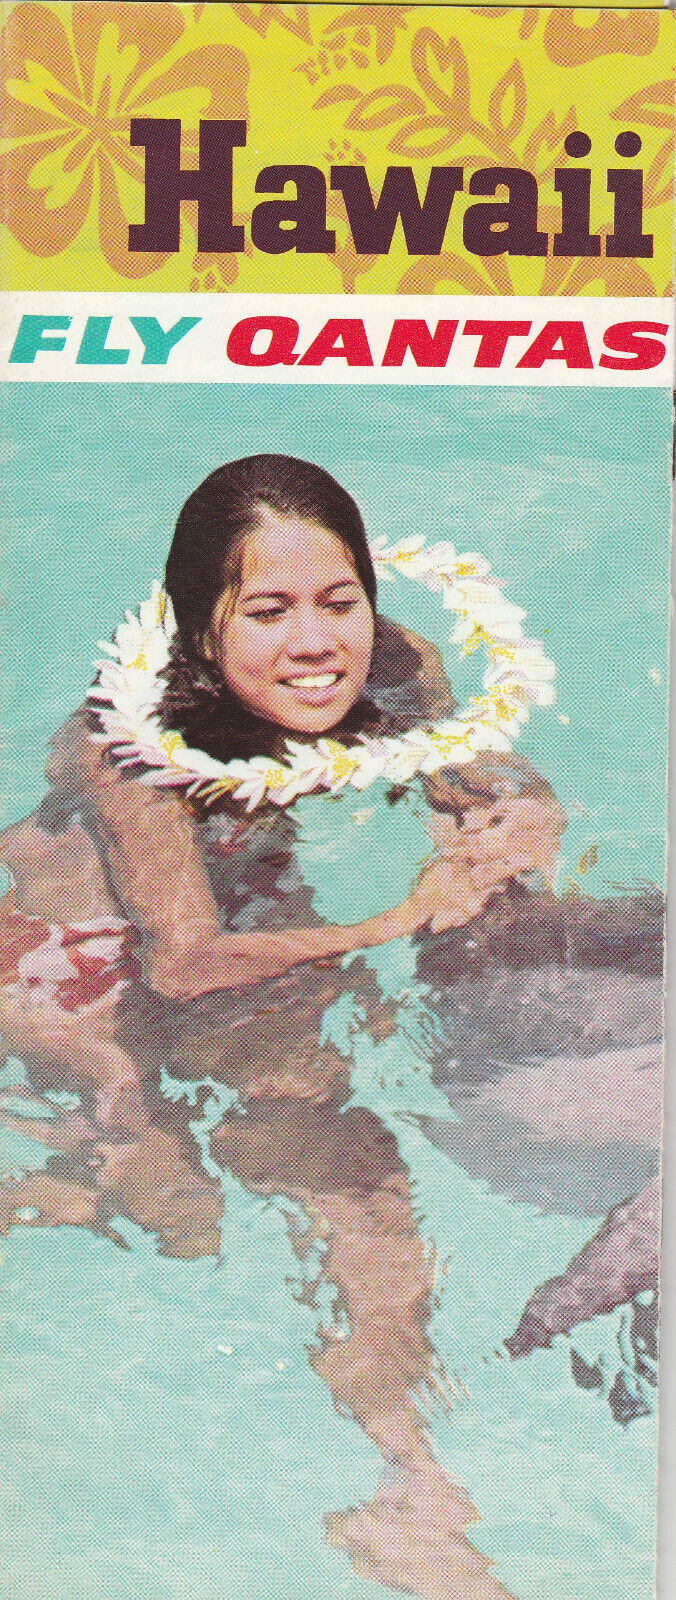 QANTAS Australia airline 1967 Hawaii promotion brochure